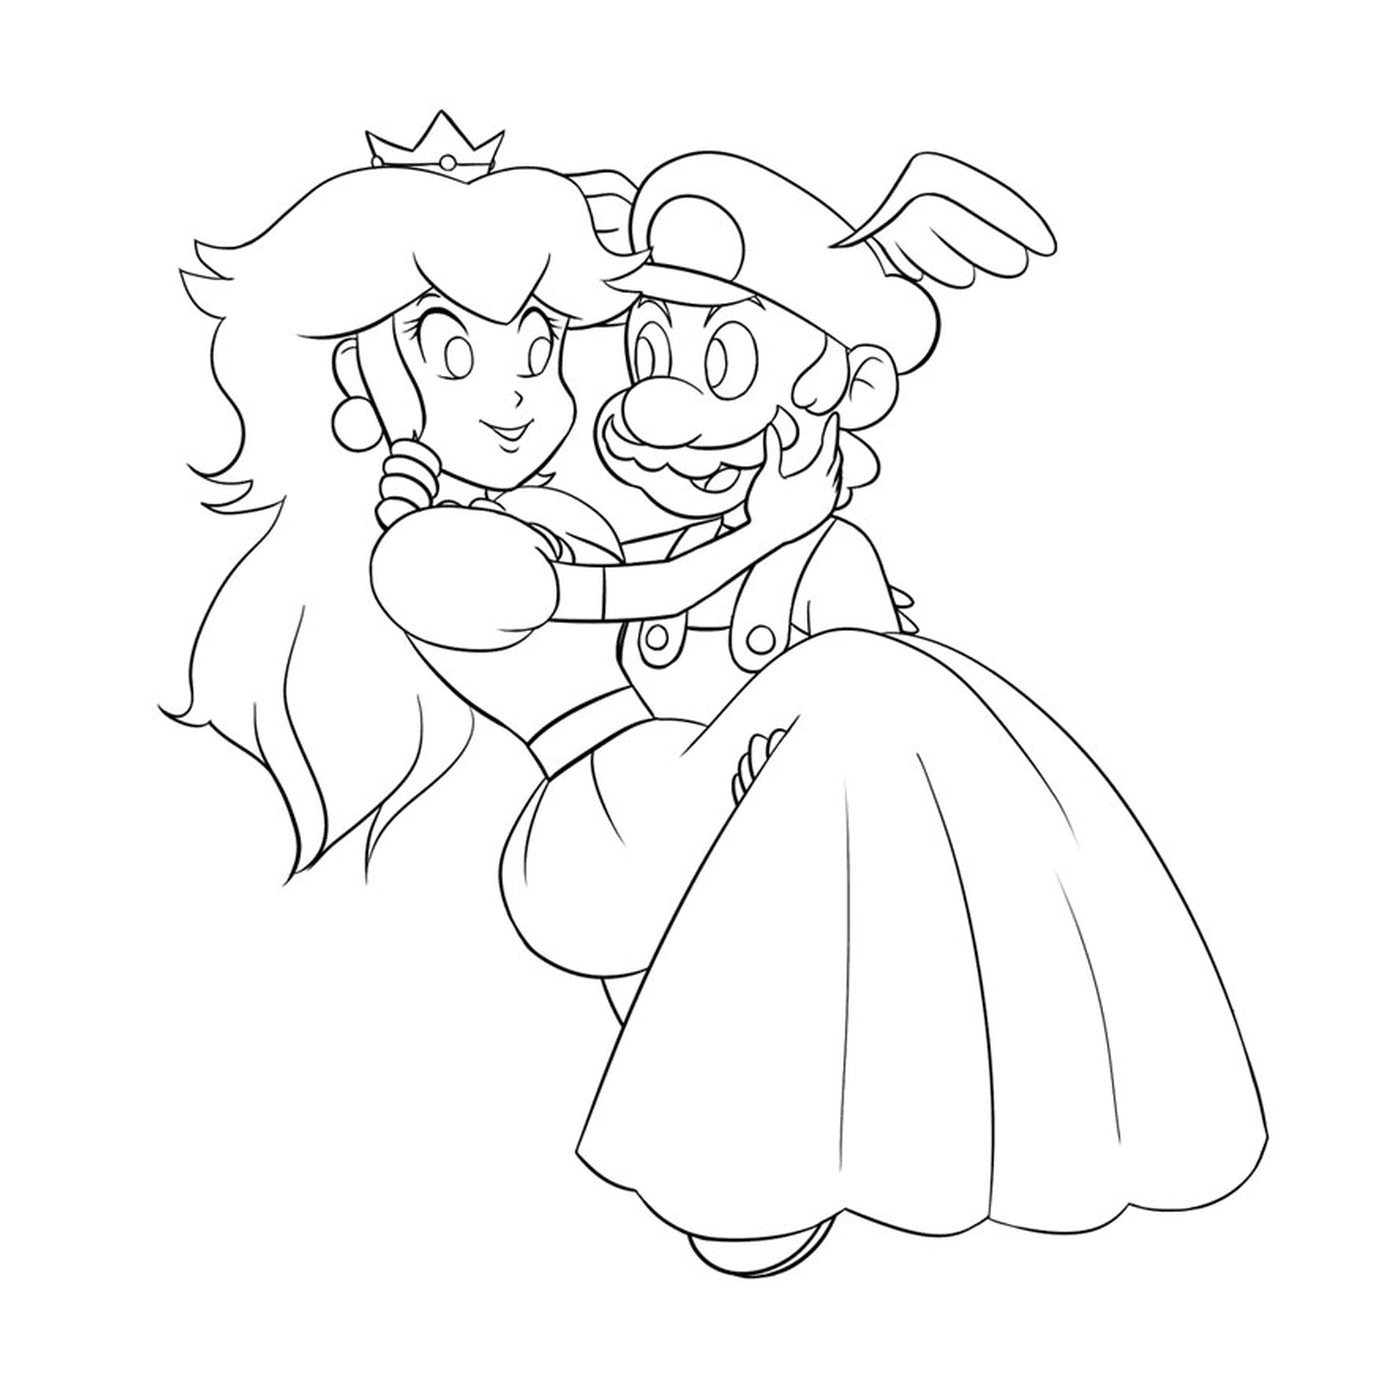  Mario and the Princess 